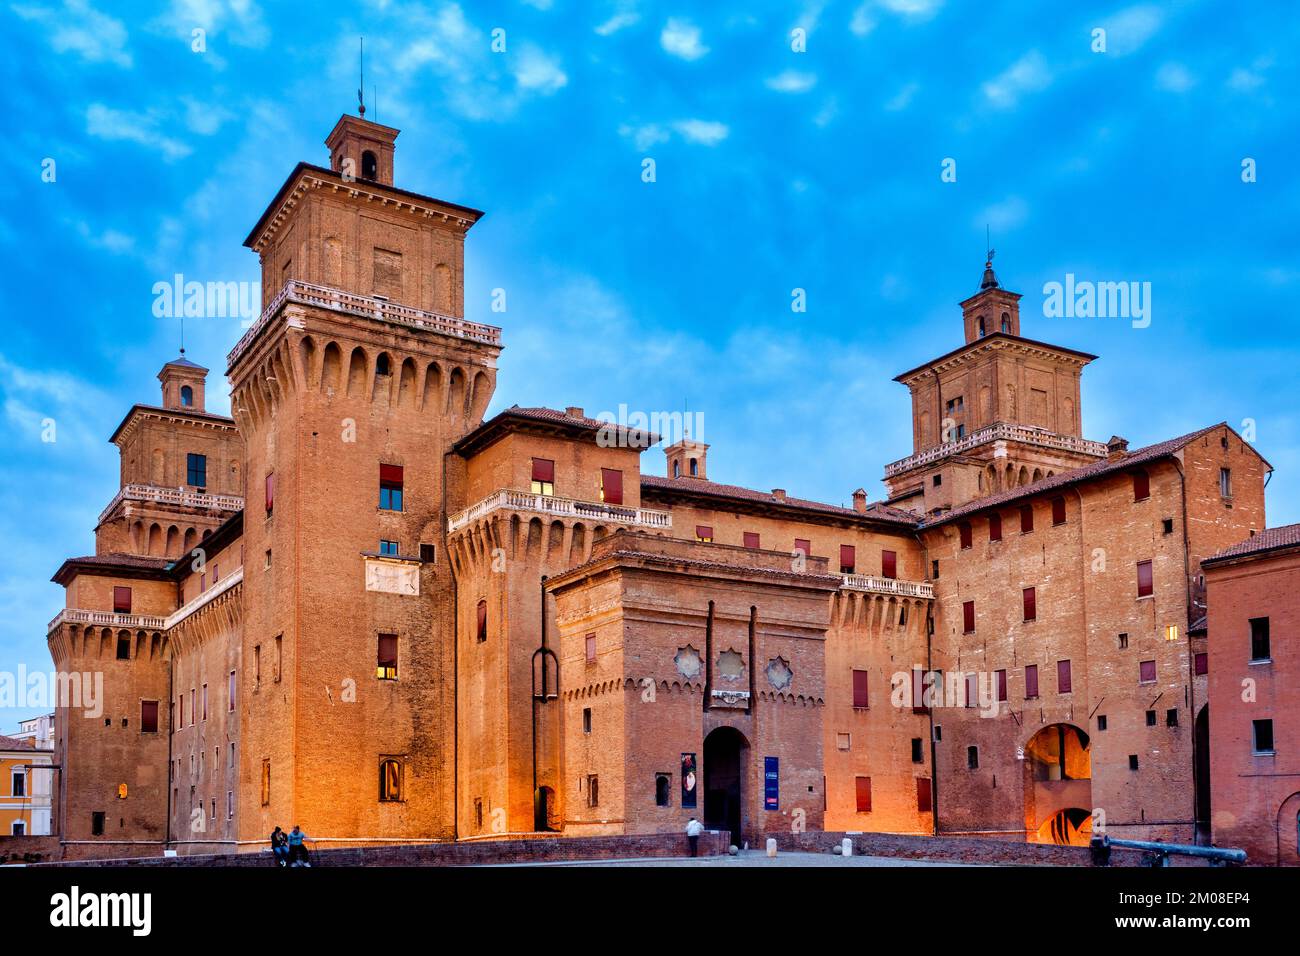 View of the Castello Estense, Ferrara Italy Stock Photo